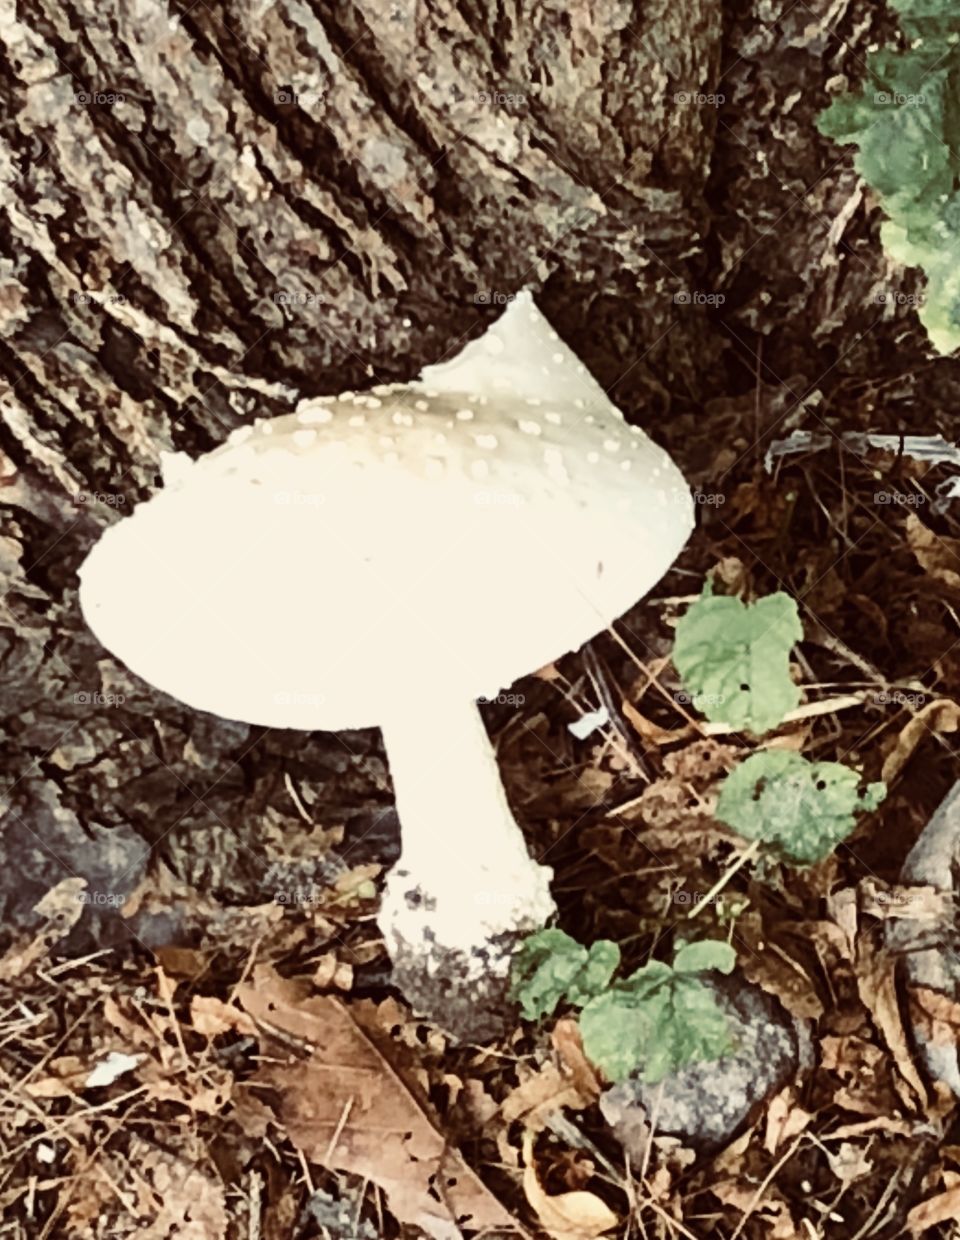 Mushroom solo